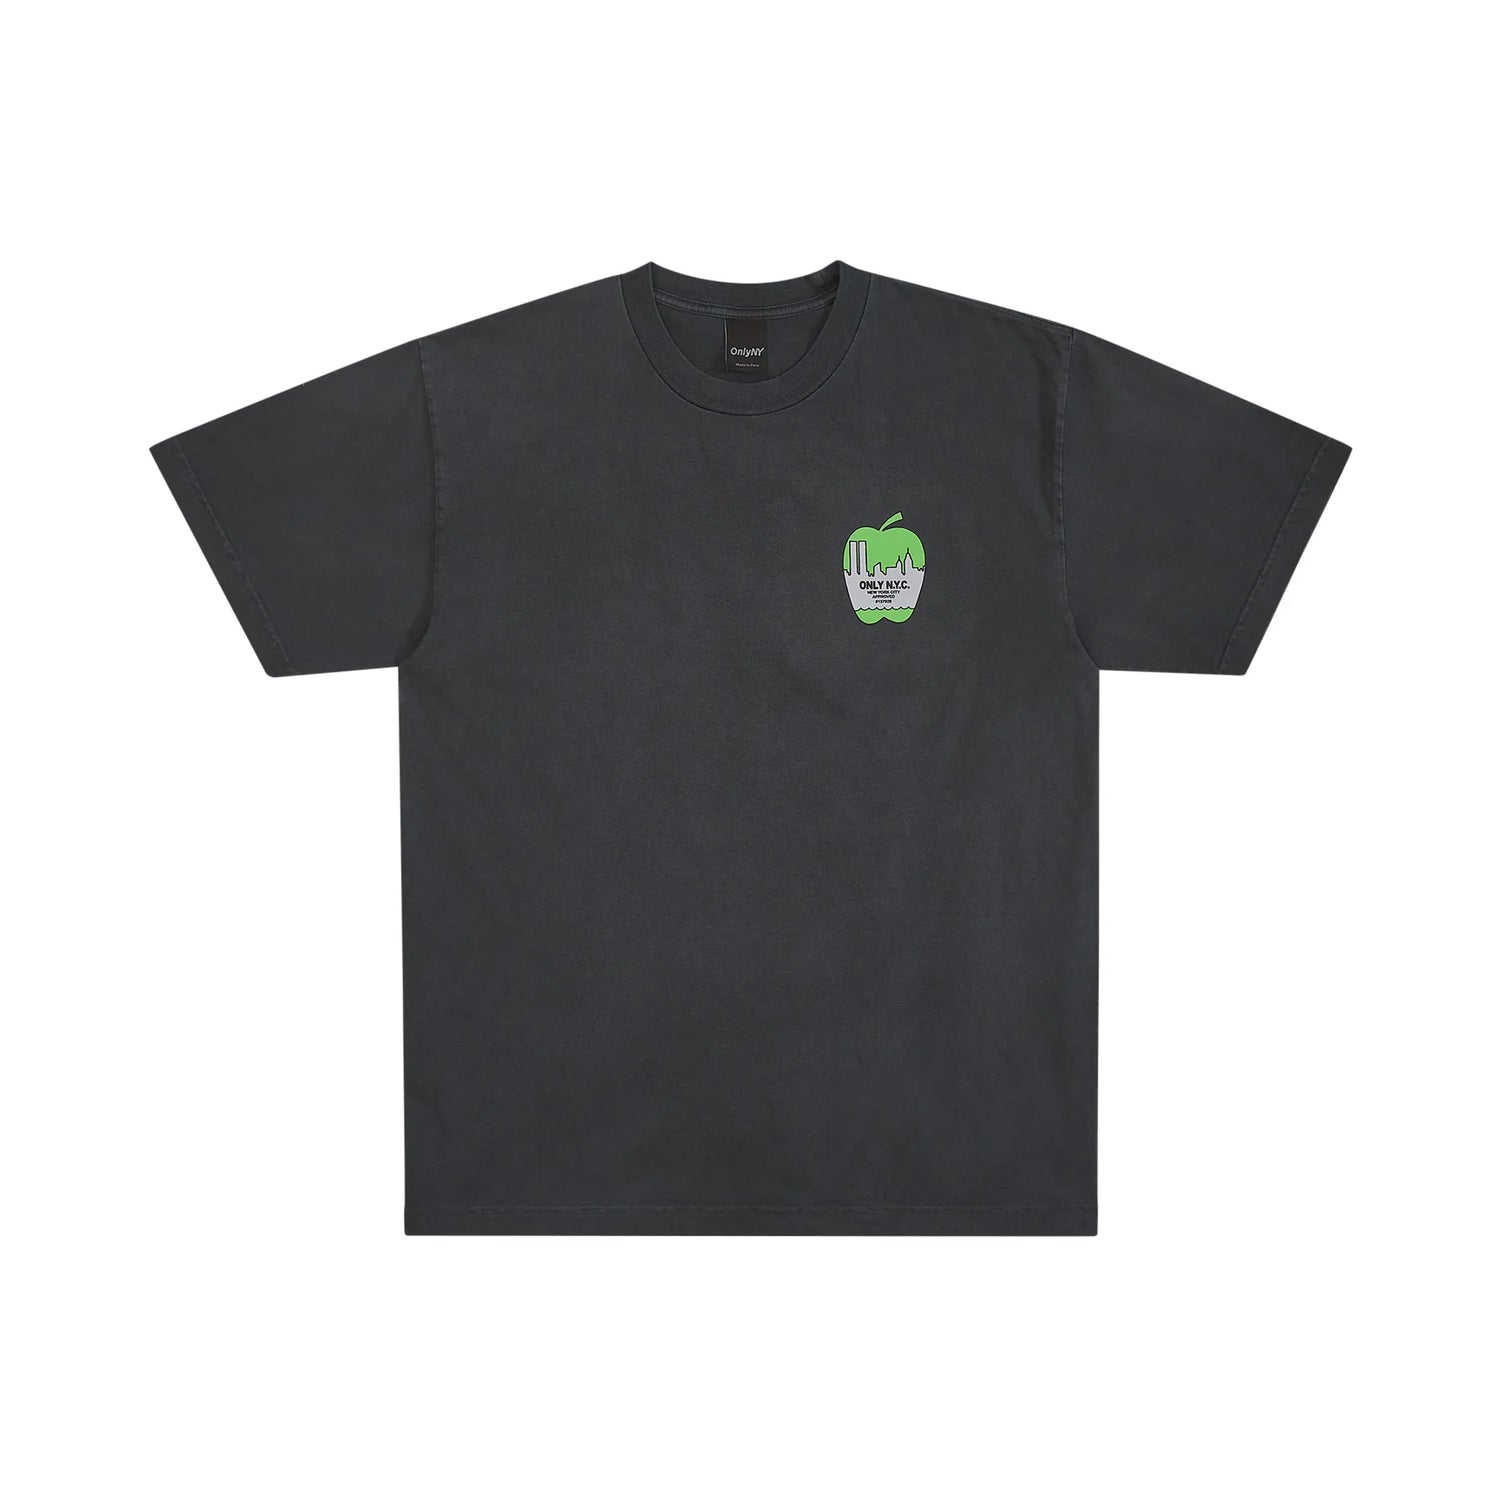 Only NY Skyline Apple T-Shirt - Vintage Black